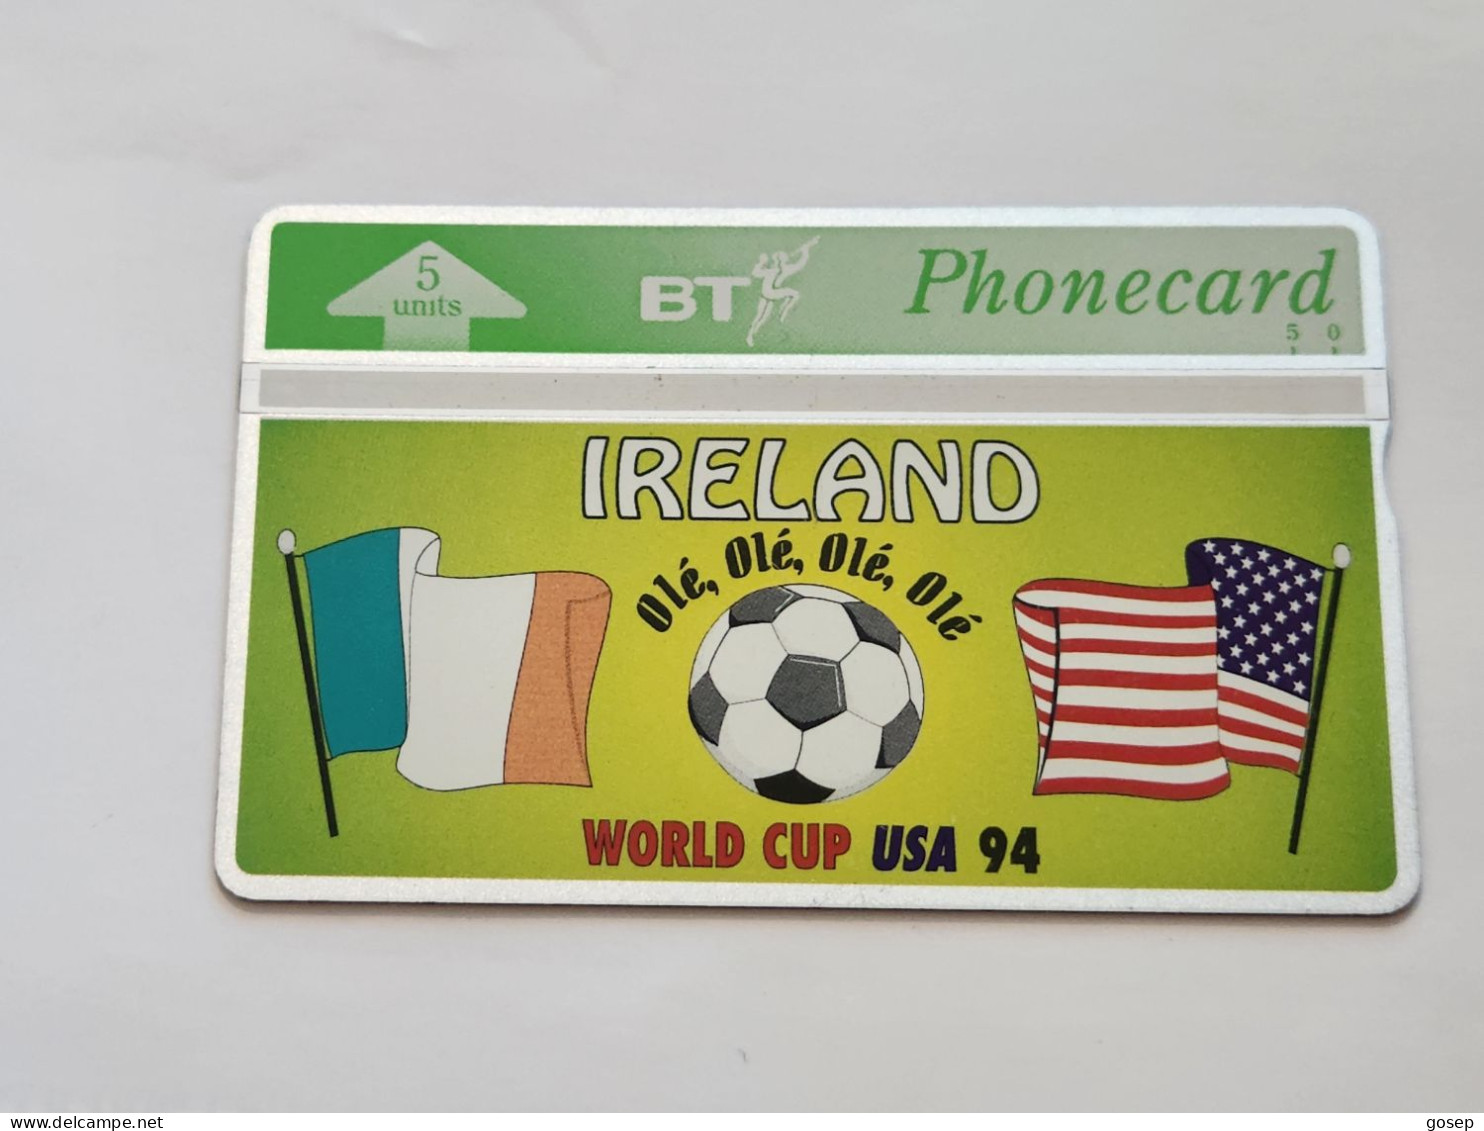 United Kingdom-(BTG-272)-Ireland World Cup-USA-1994-(261)(5units)(403D58107)(tirage-5.000)-price Cataloge-6.00£-mint - BT Algemene Uitgaven